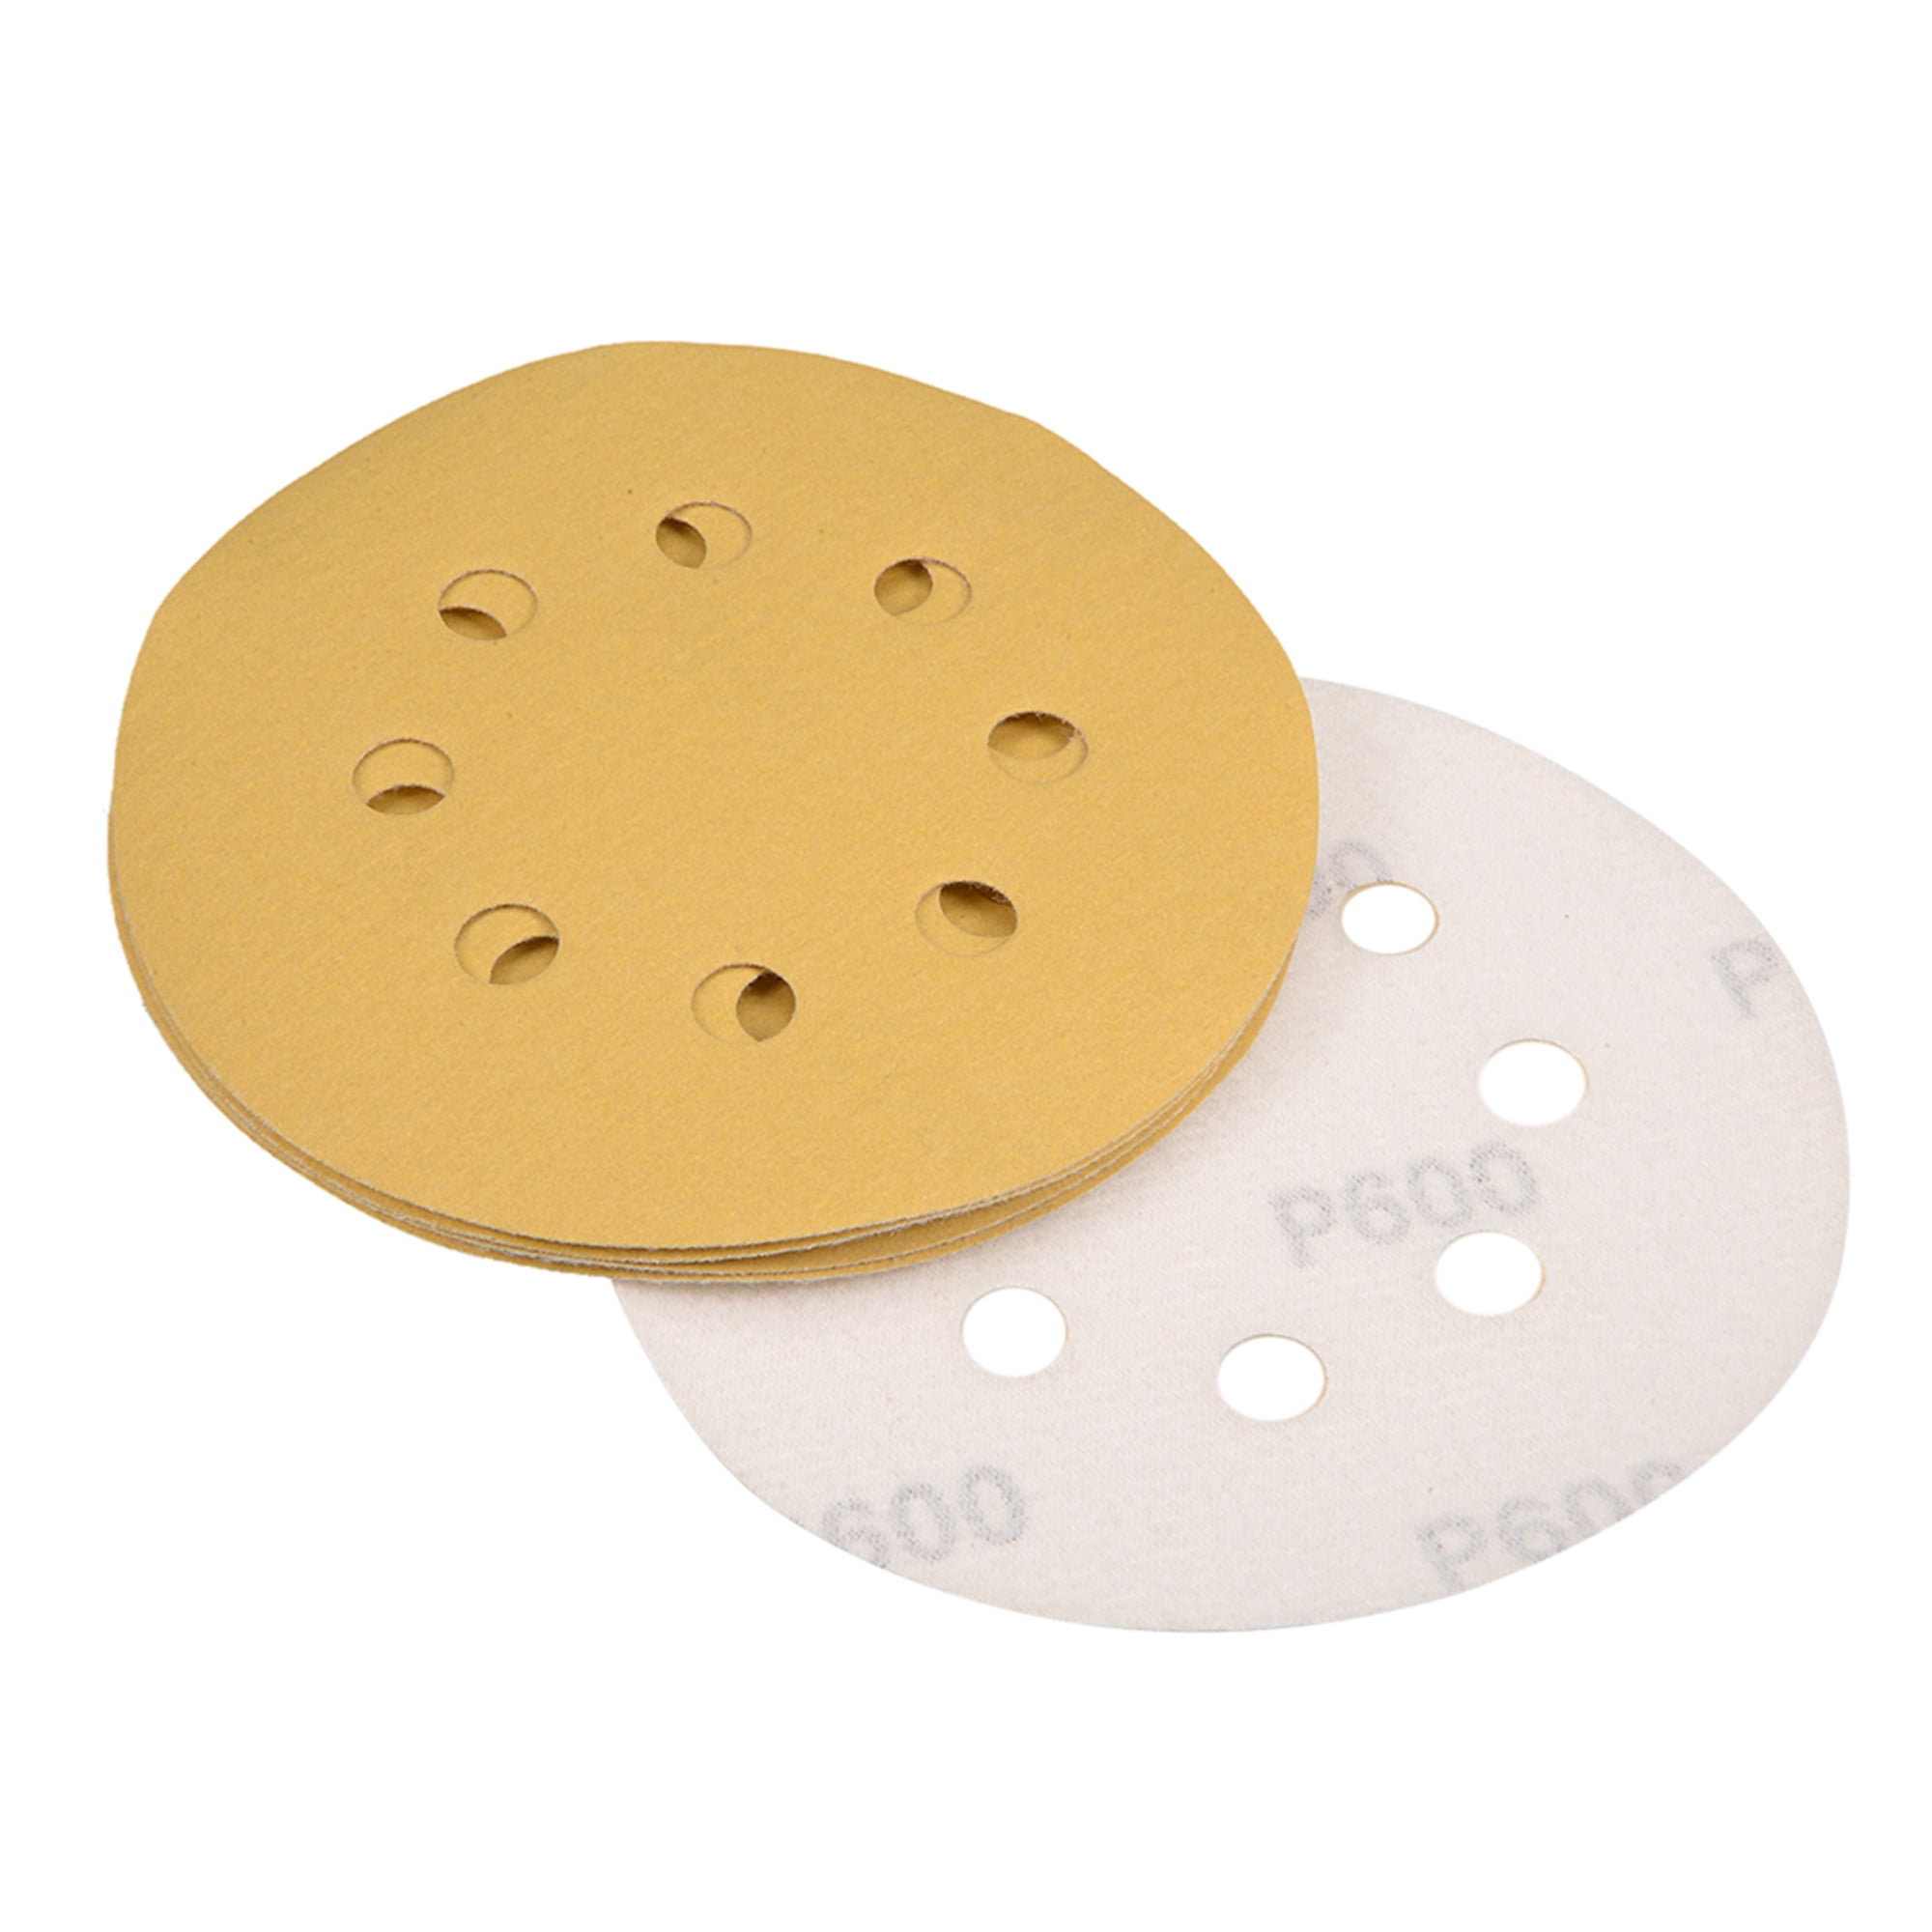 10Pcs 180mm 7 inch Sanding Discs Sandpaper Film Pads 8 Hole Grits 40-2000 